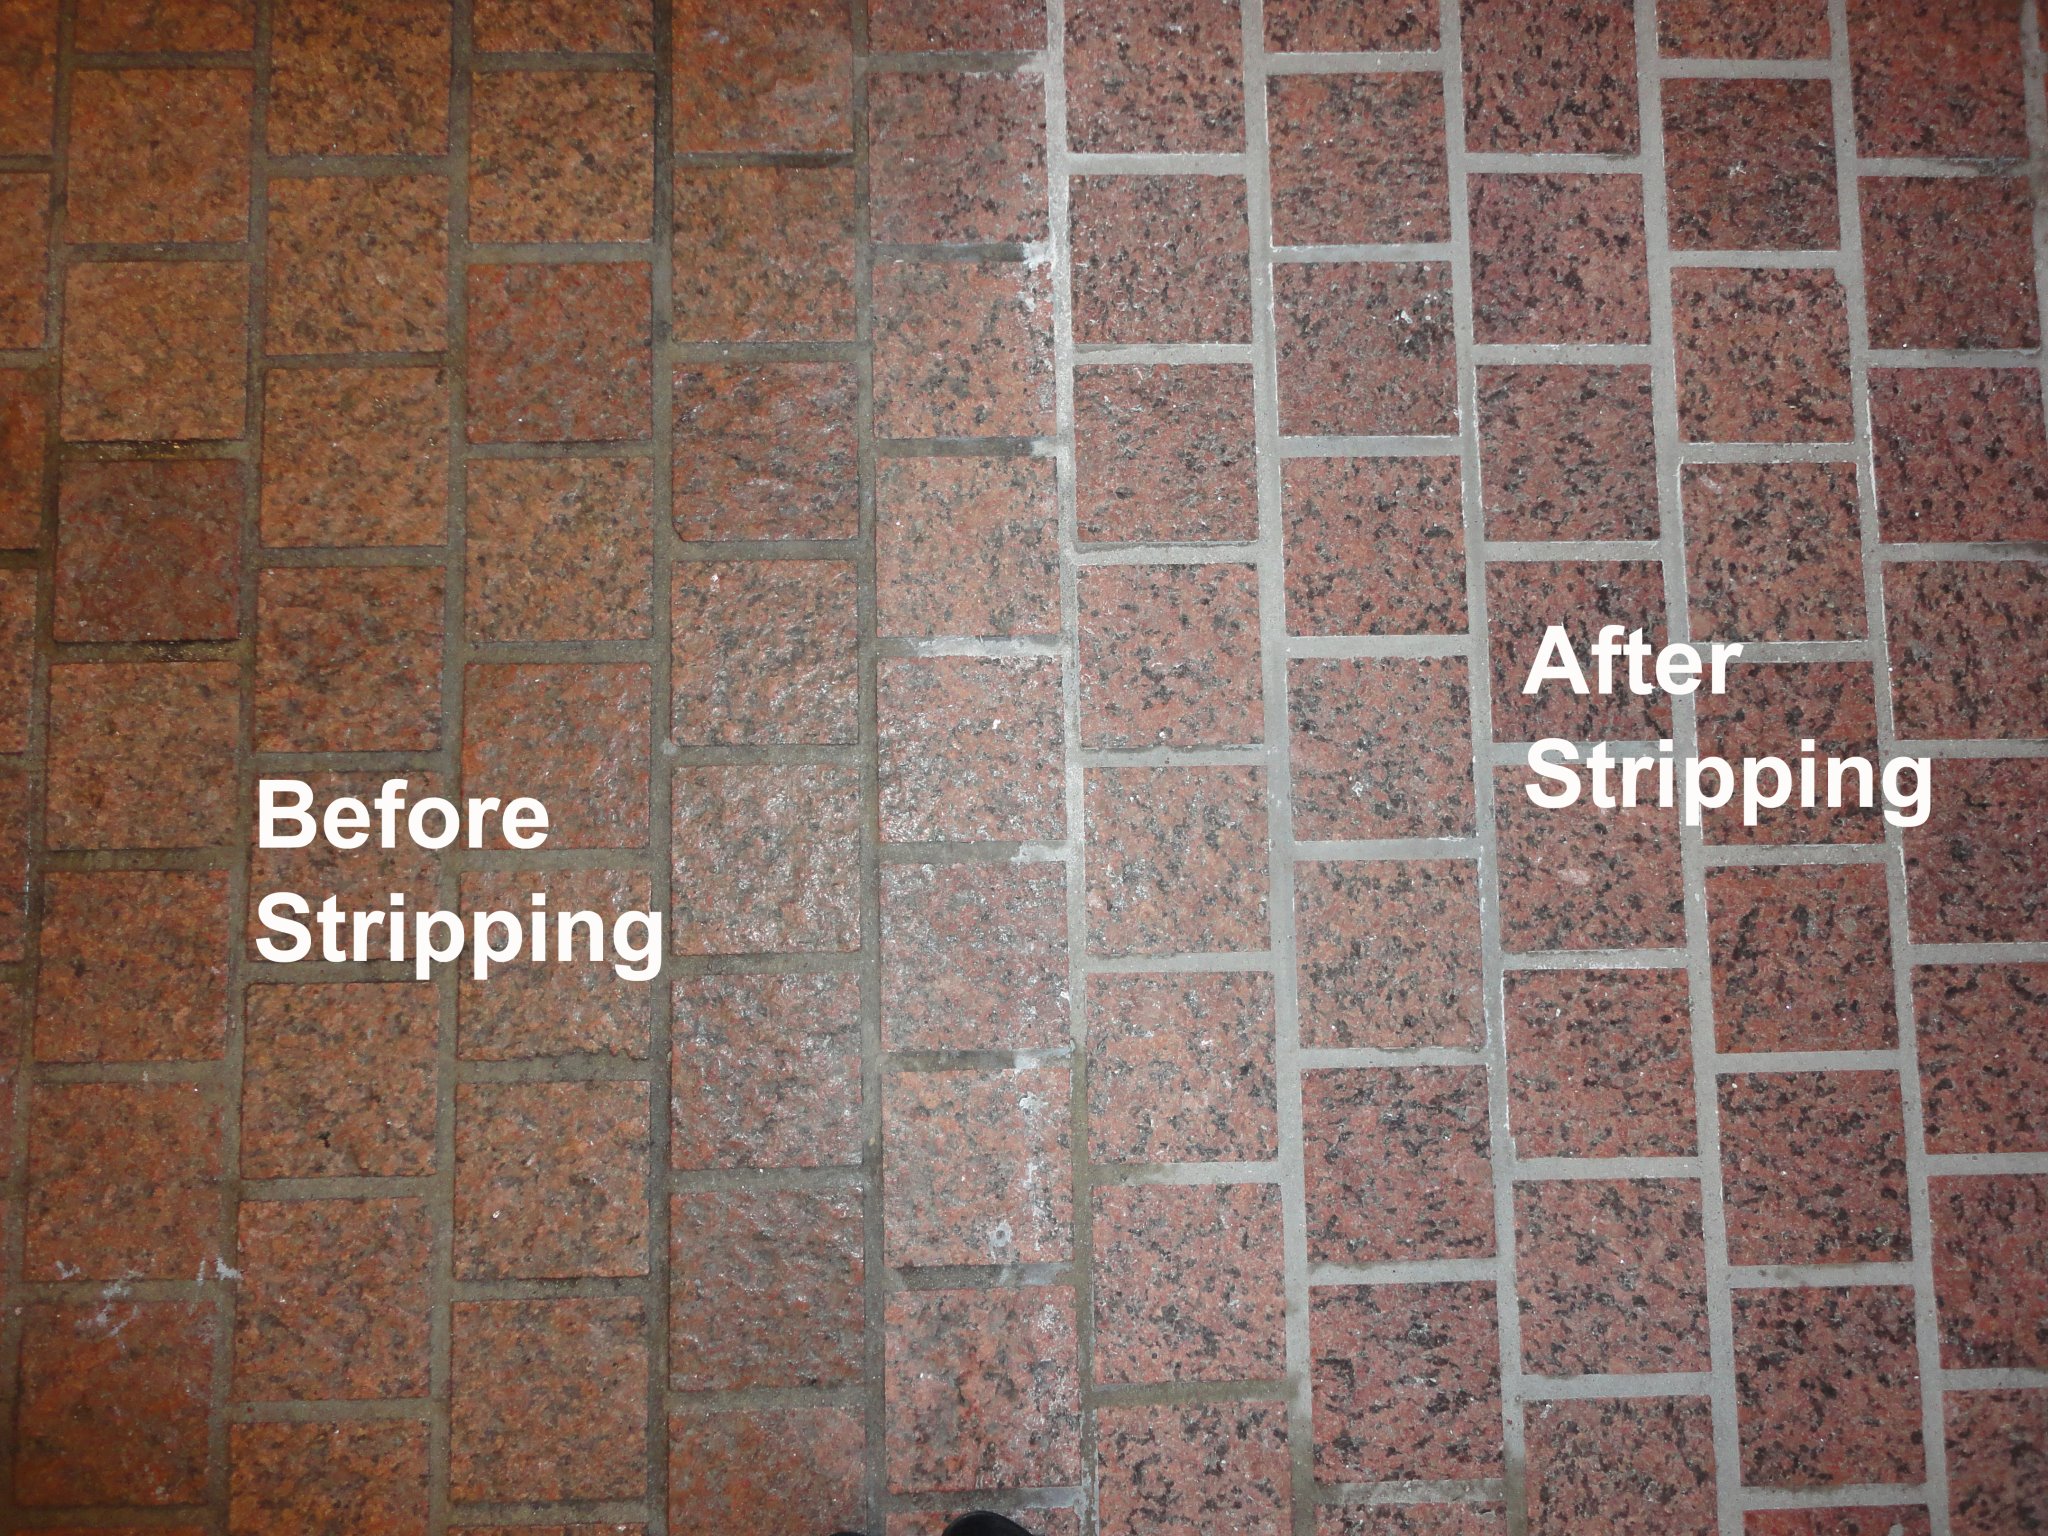 Why To Strip Slate Floors for Floor Restoration?